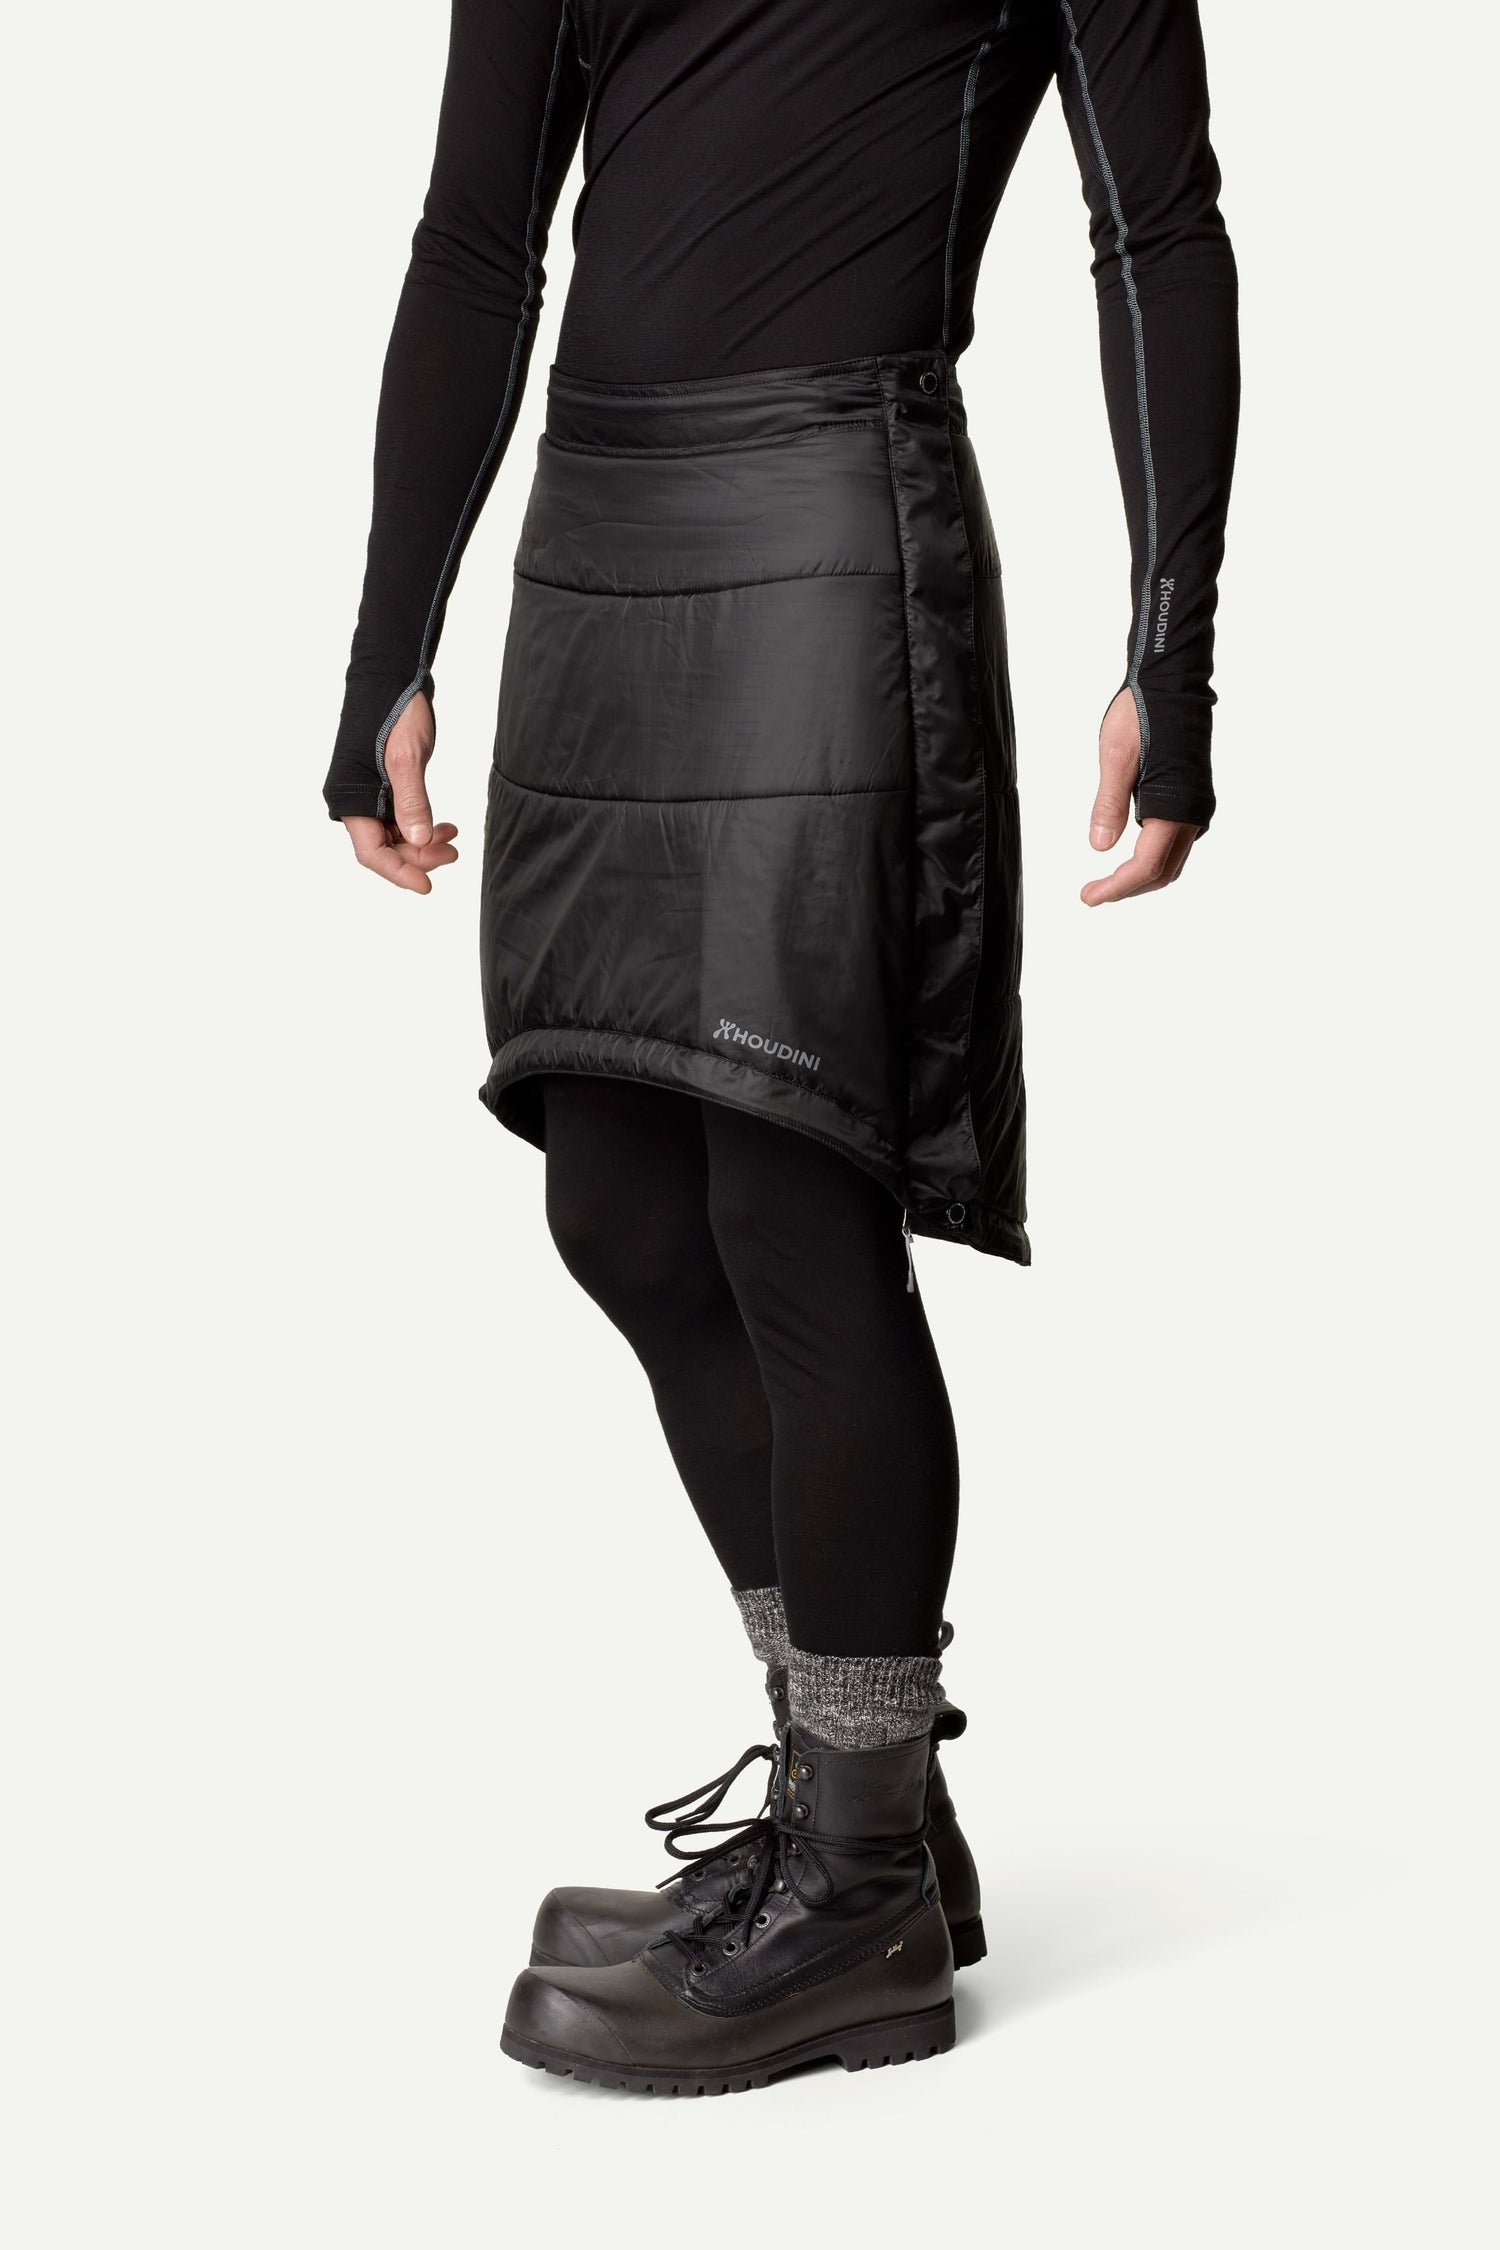 Houdini Unisex Sleepwalker - Recycled Polyester True Black Skirt